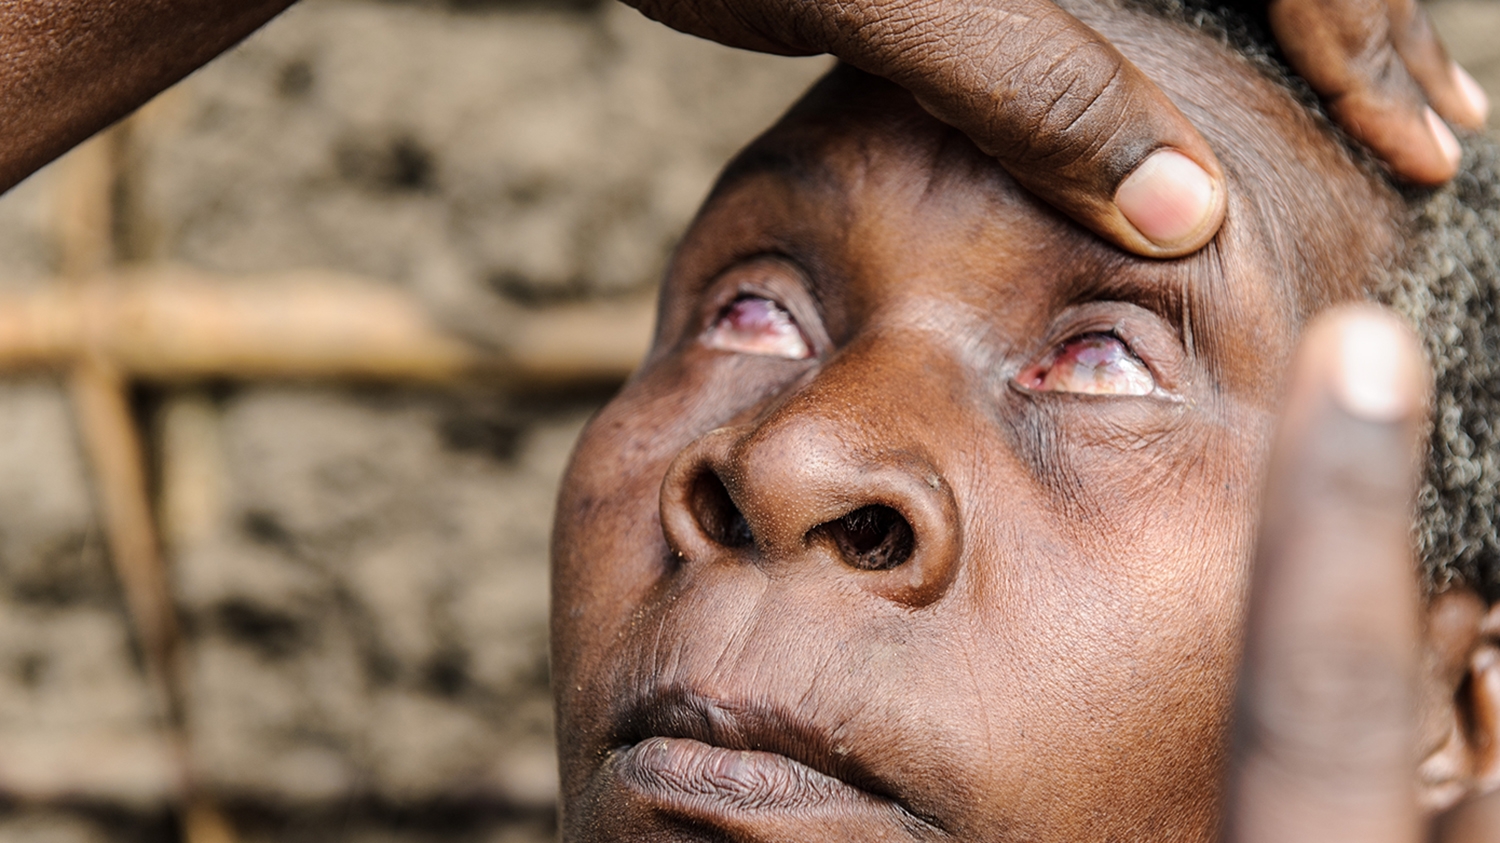 Aluna, who has advanced trachoma, has her eyes examined by an eye health worker.